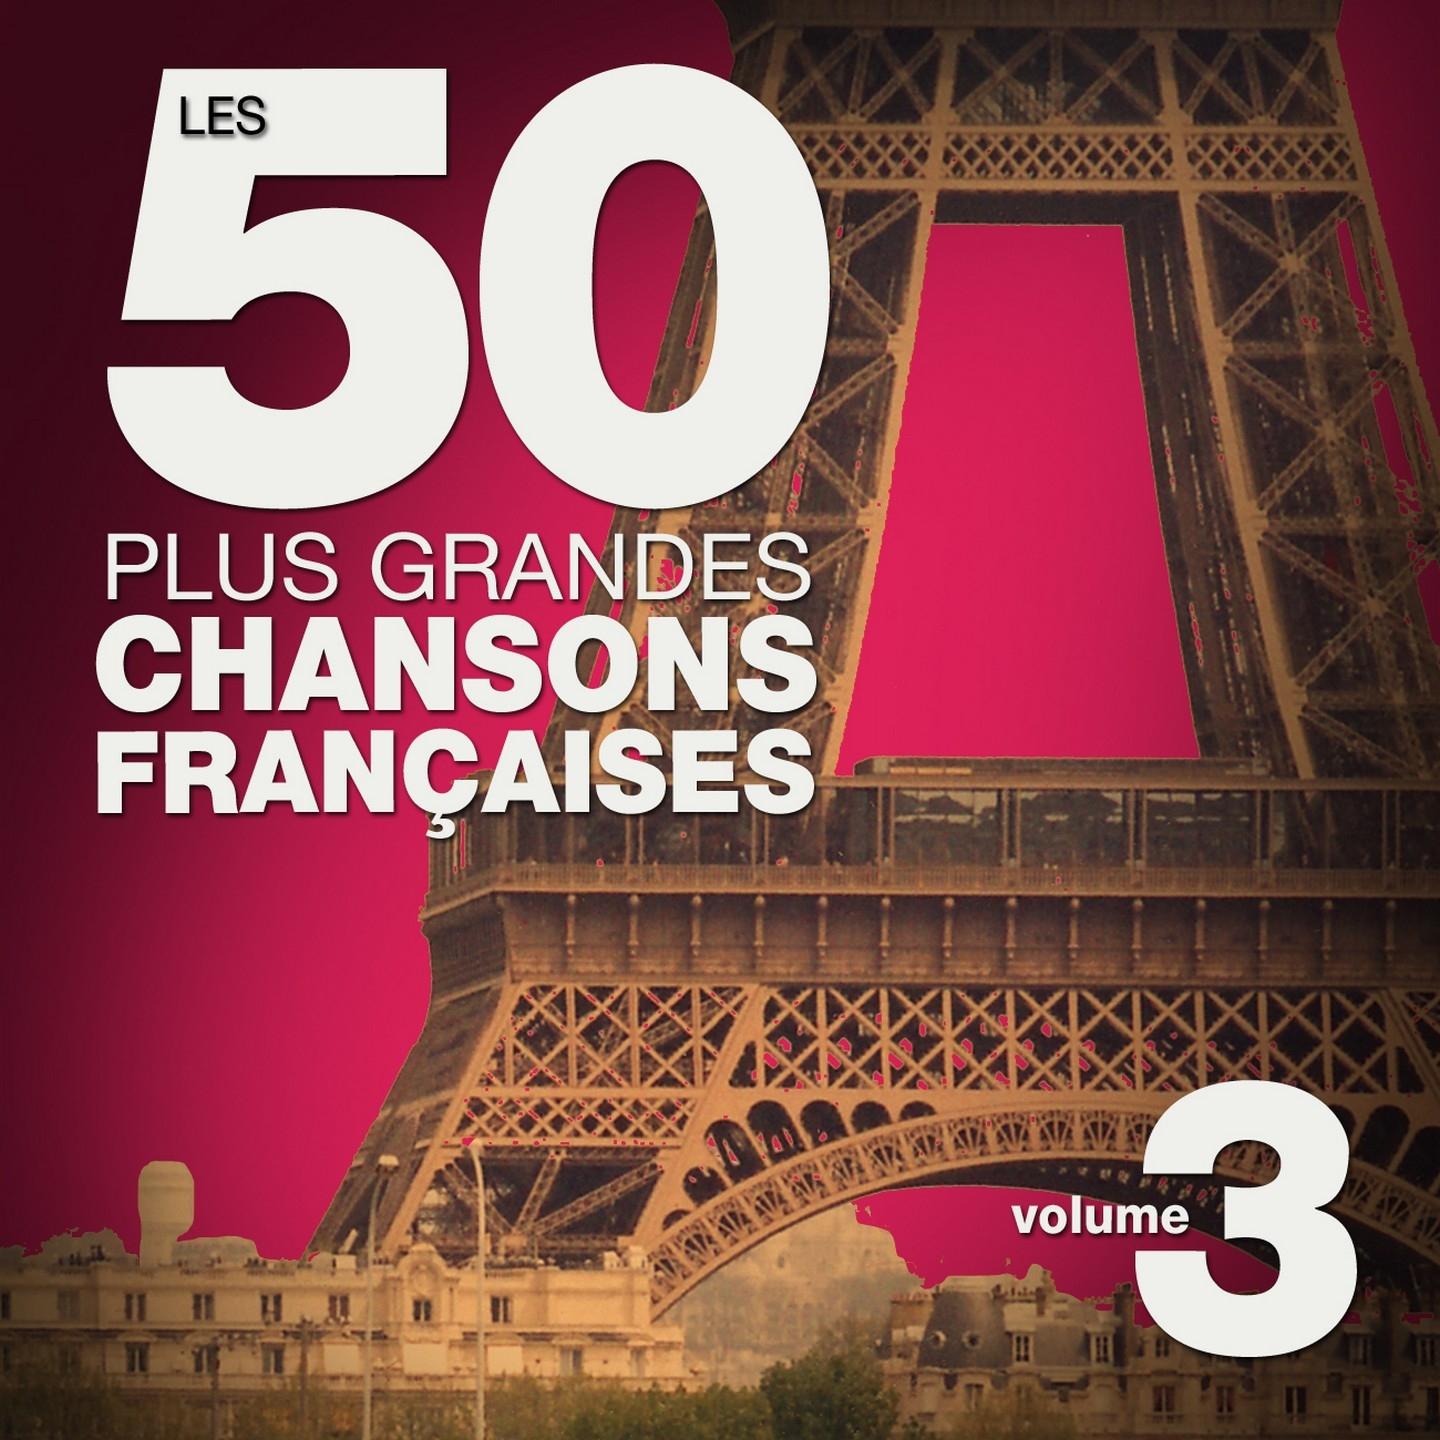 Les 50 plus grandes chansons fran aises French Songs, Vol. 3